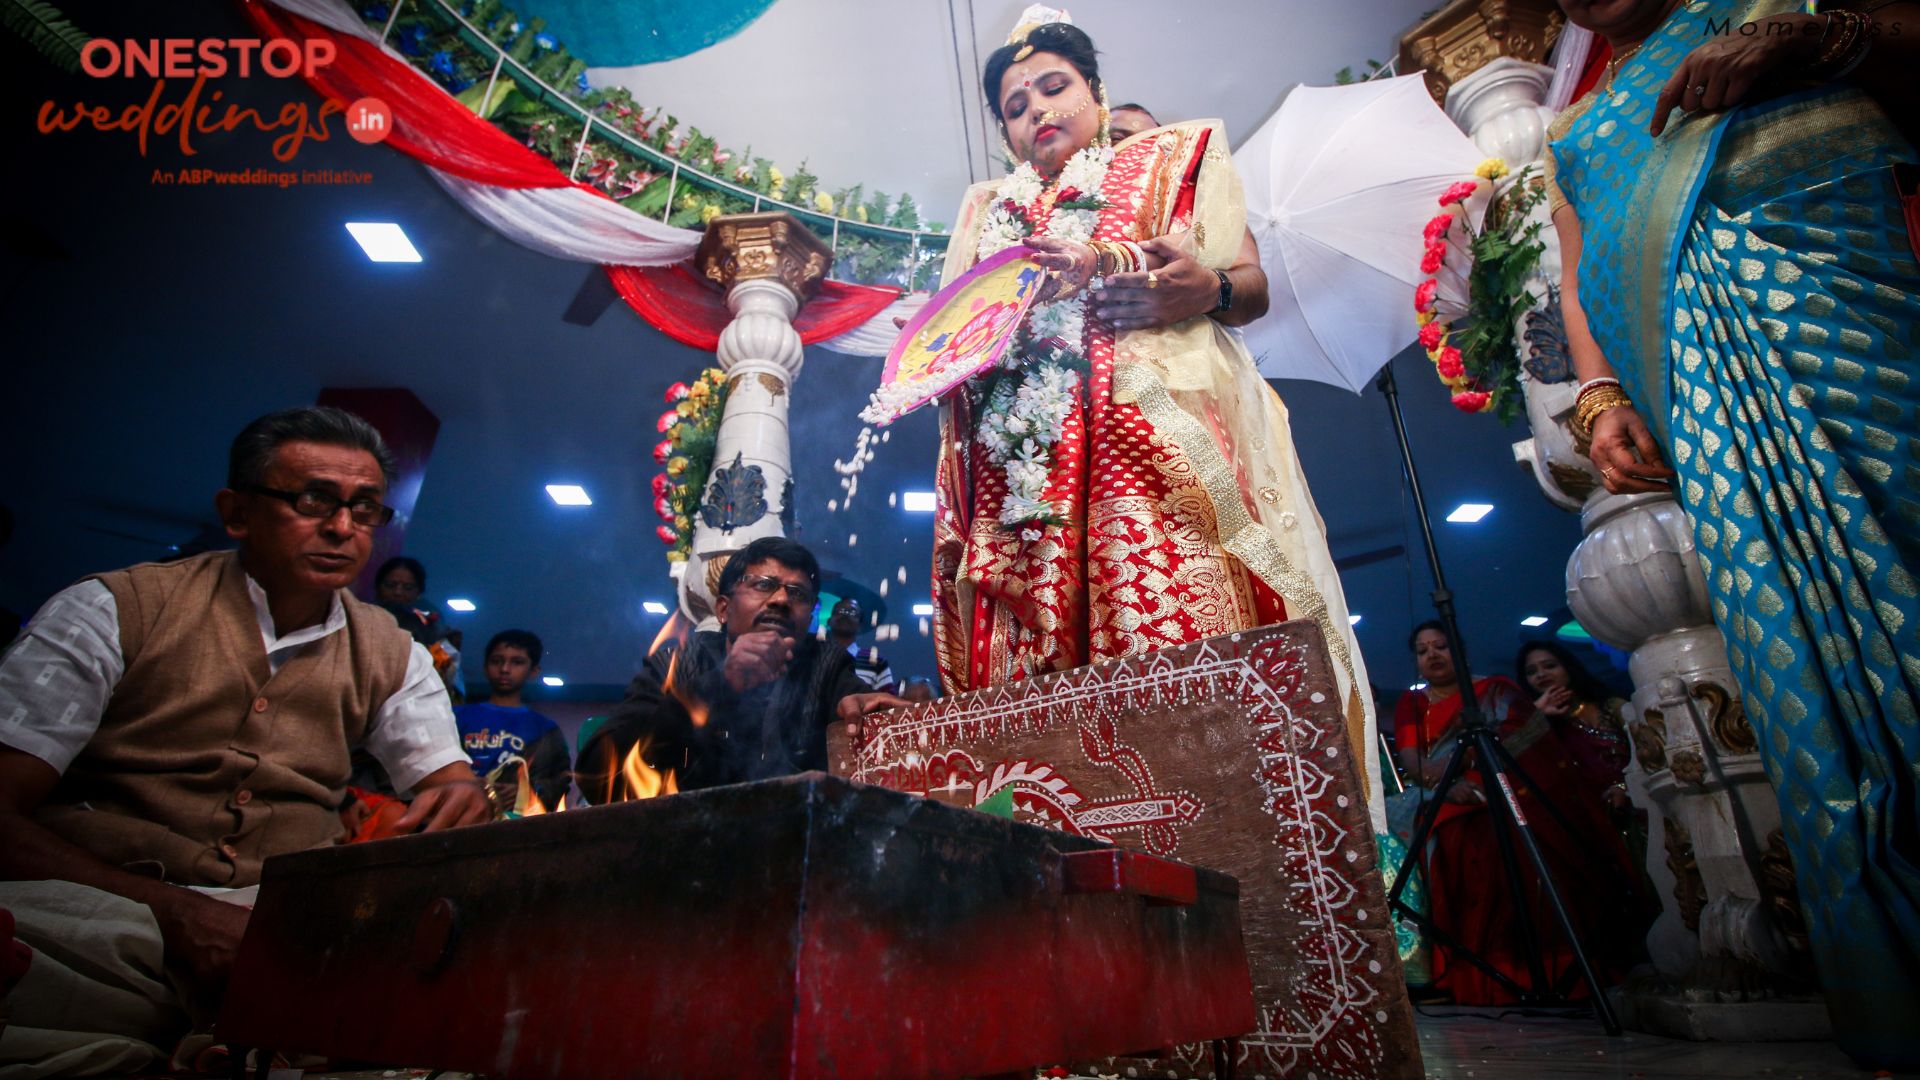 Premier Wedding Planner Services in Kolkata - Kolkata Other